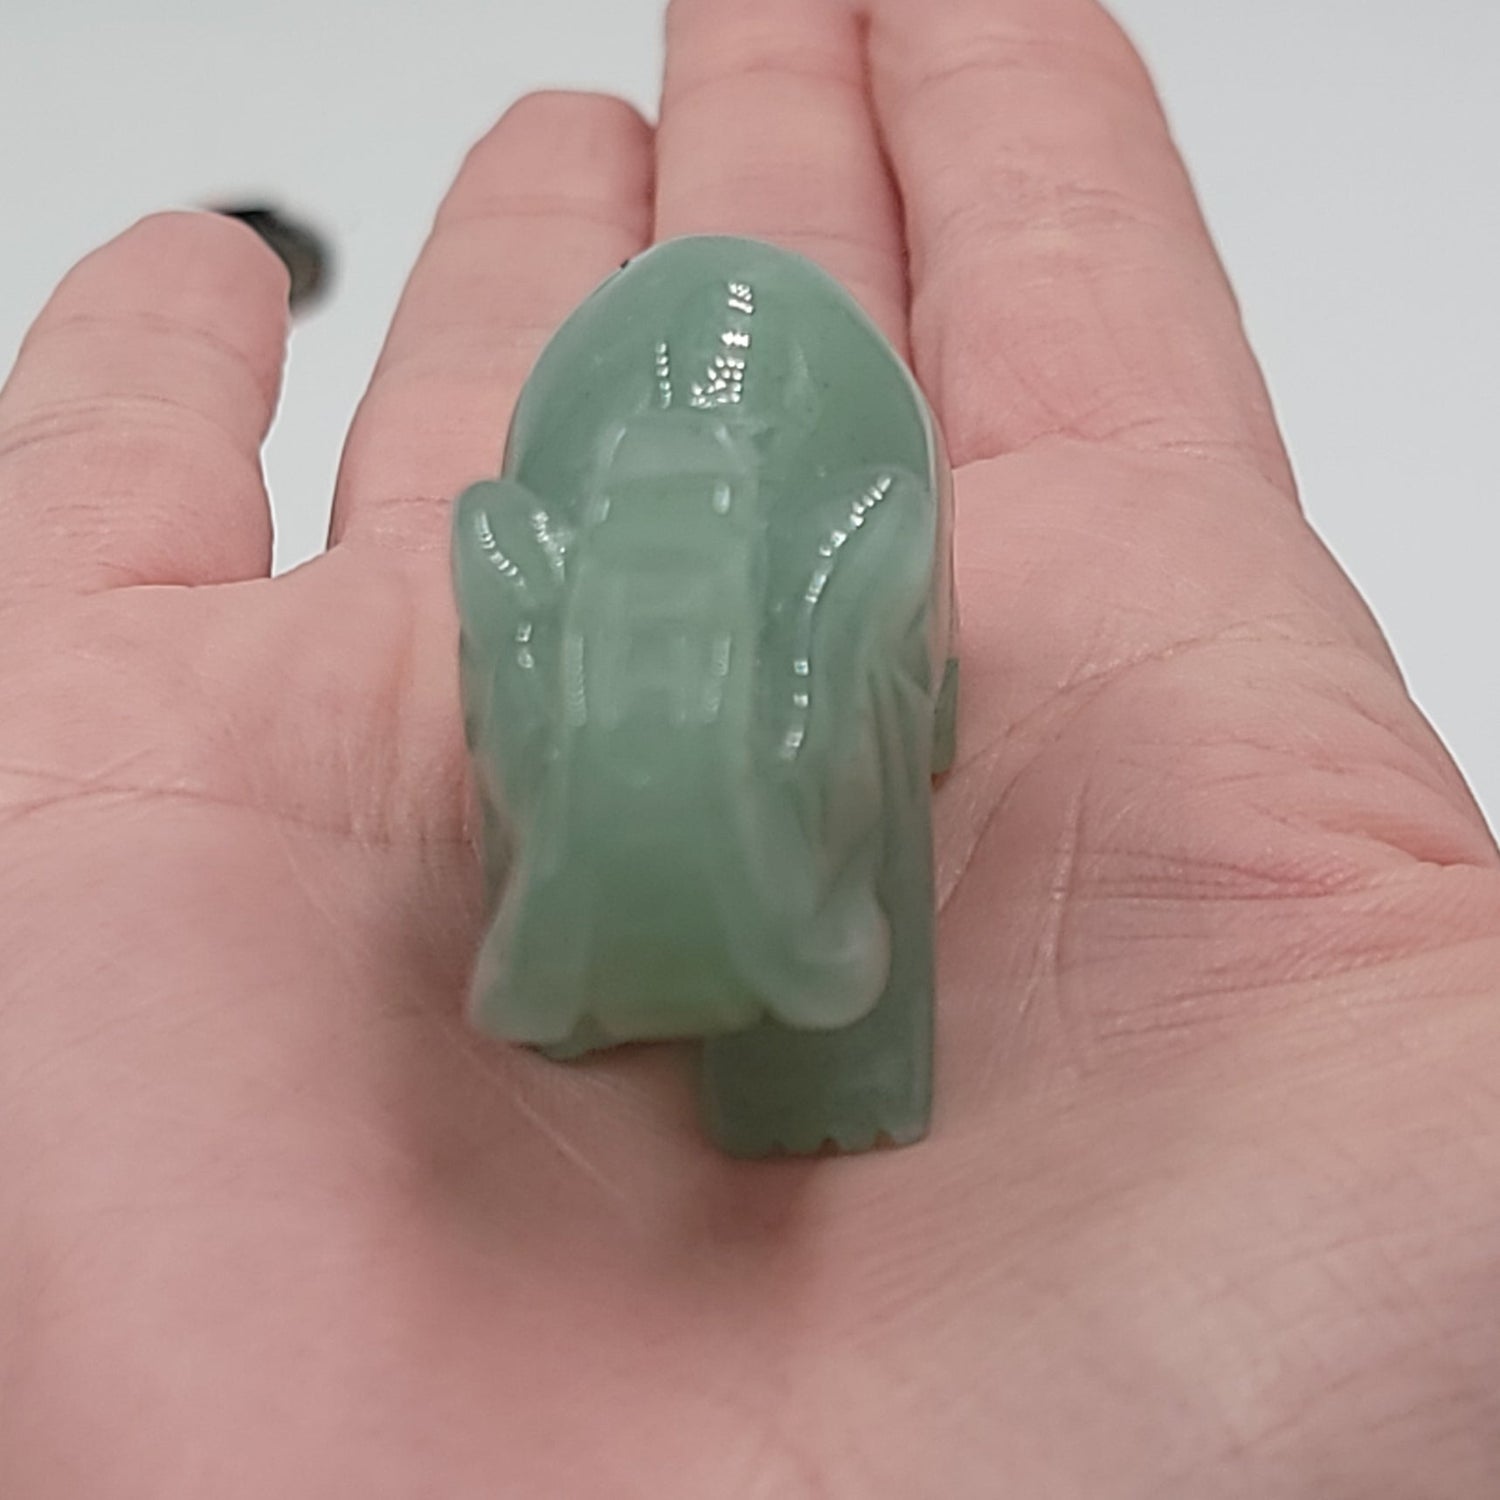 Green Aventurine Elephant Figurine 2" 50mm - Elevated Metaphysical